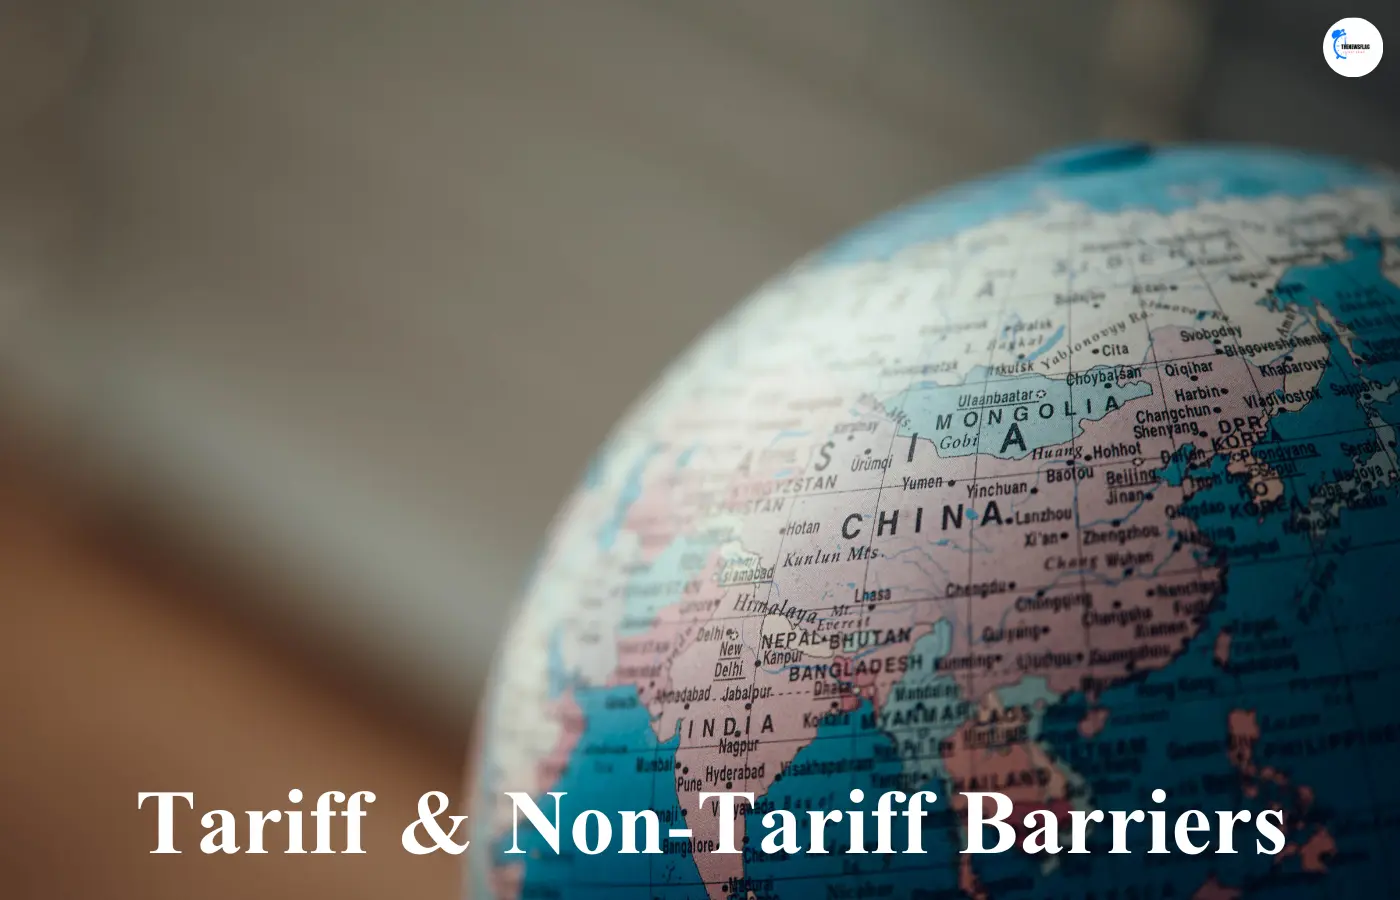 Non-tariff barriers for pharma investors